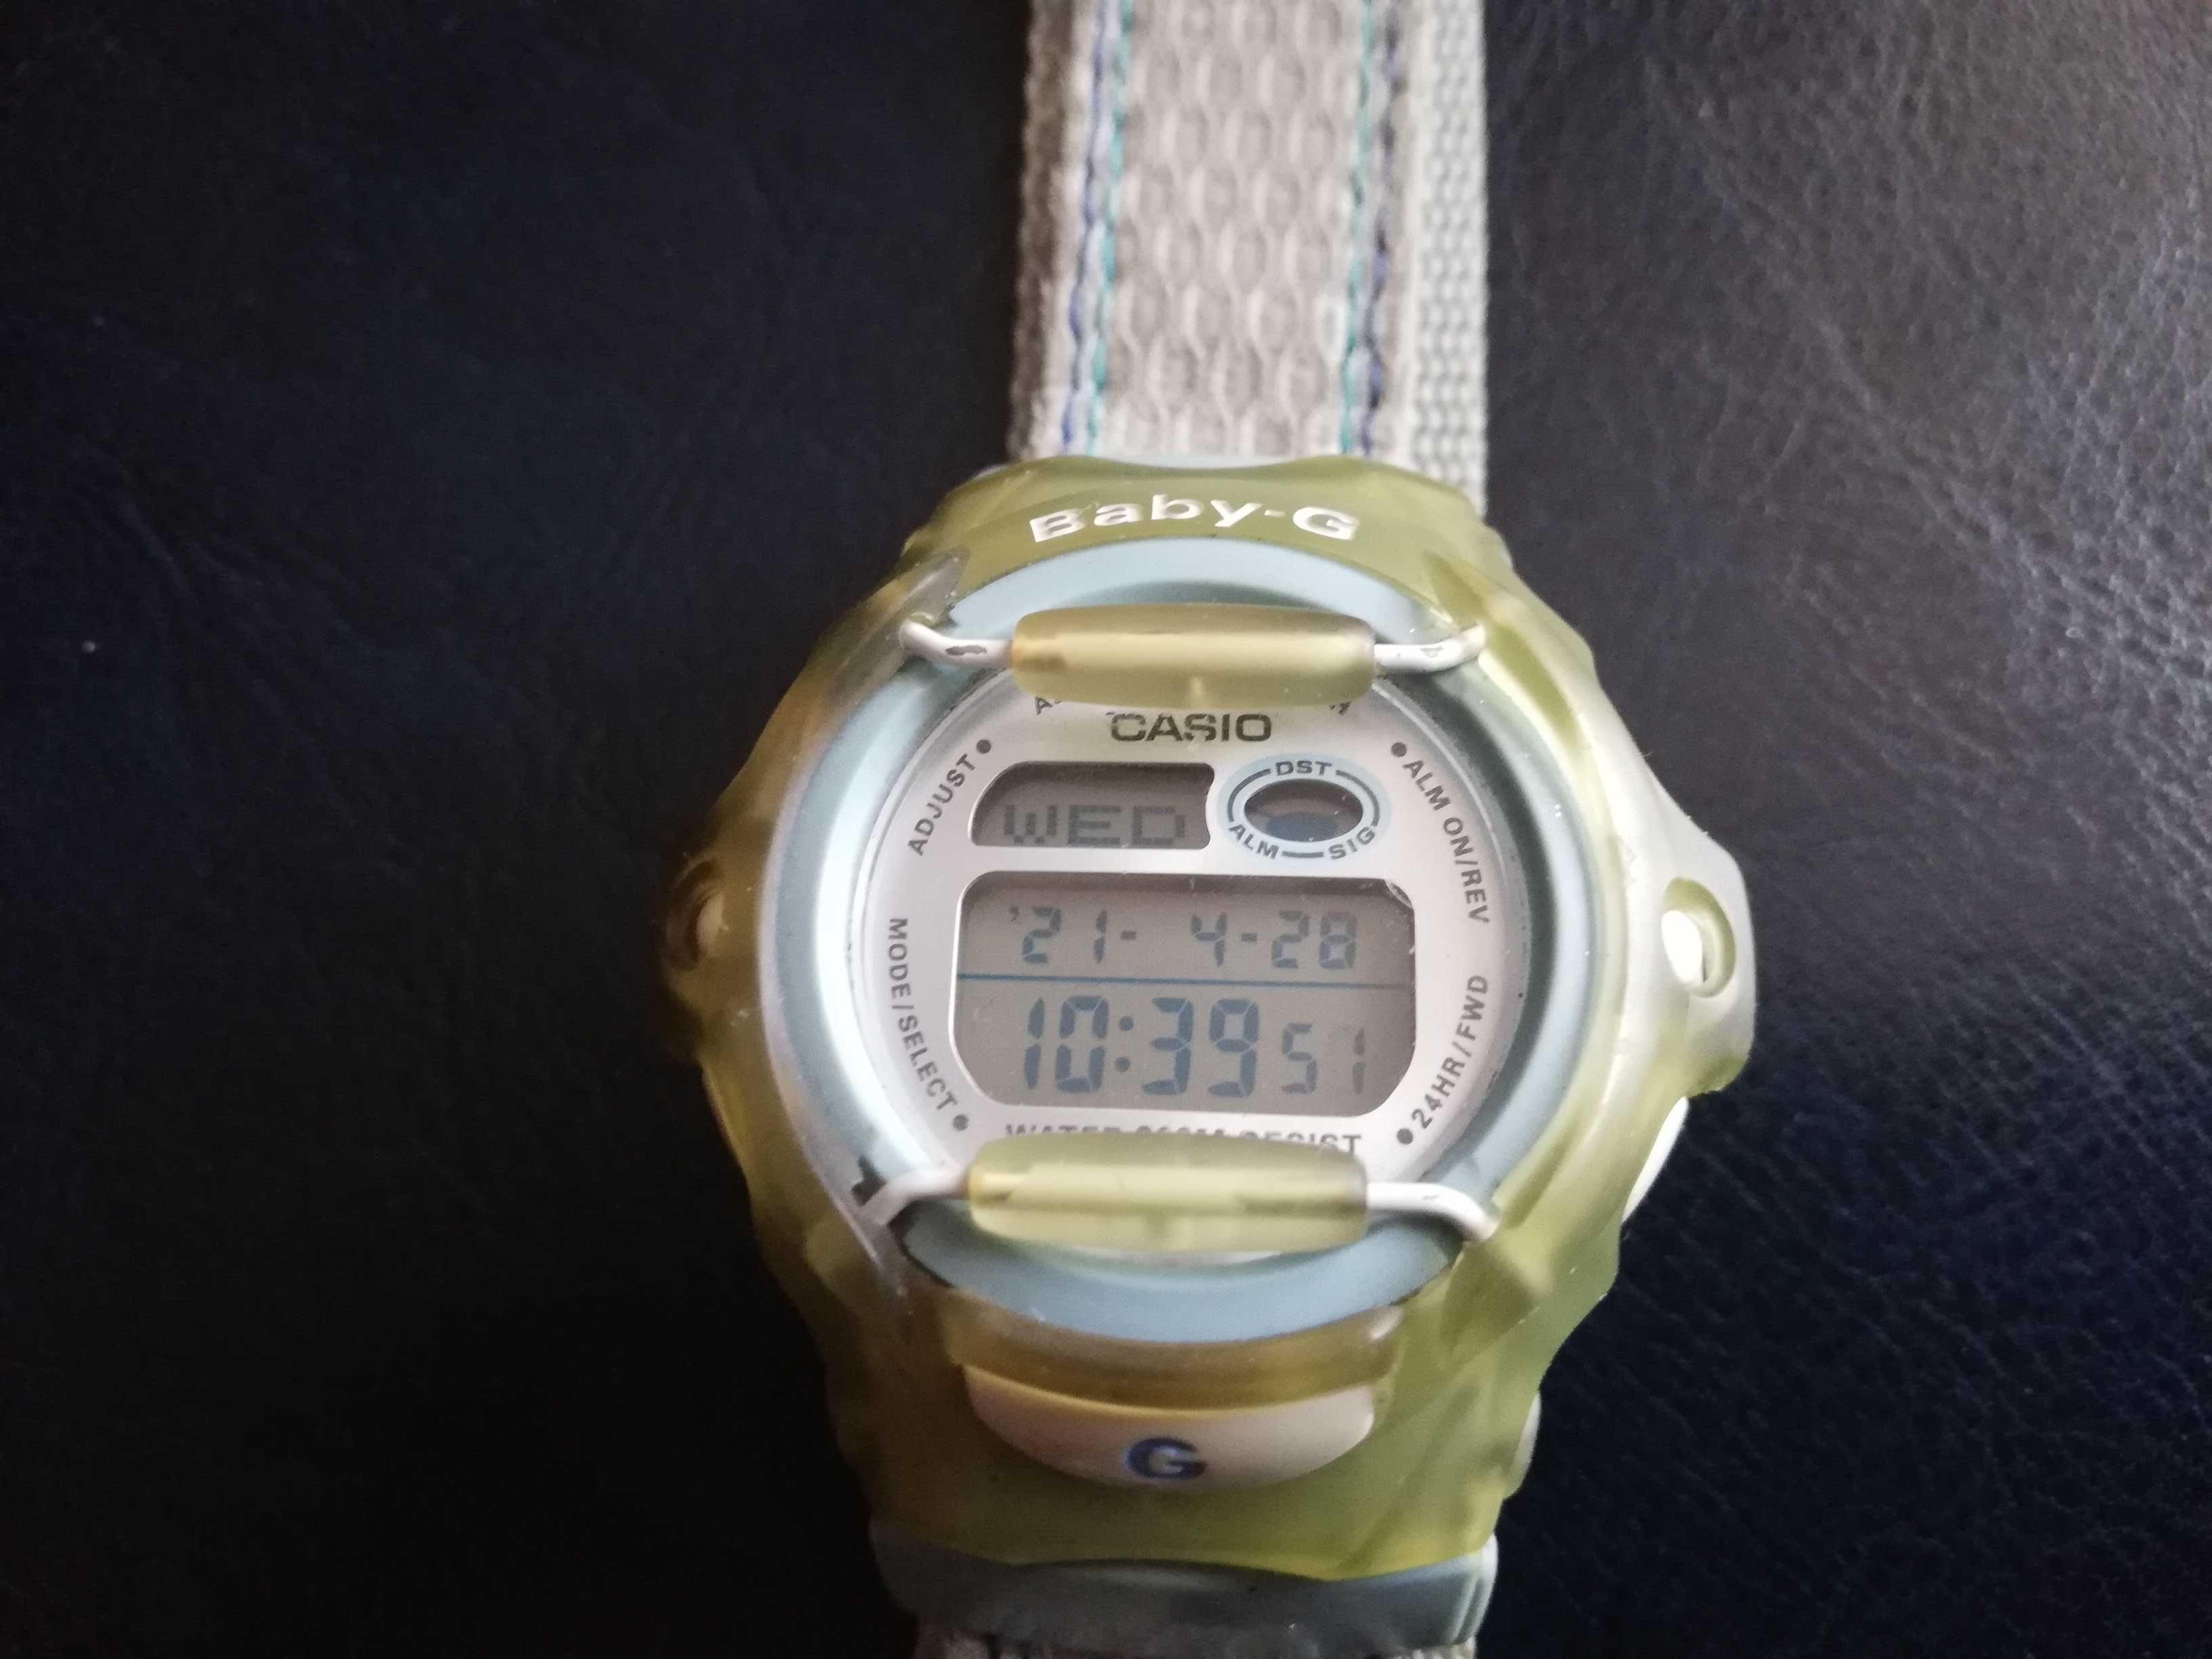 Sprzedam oryginalny zegarek Casio Baby-G - oryginalny pasek